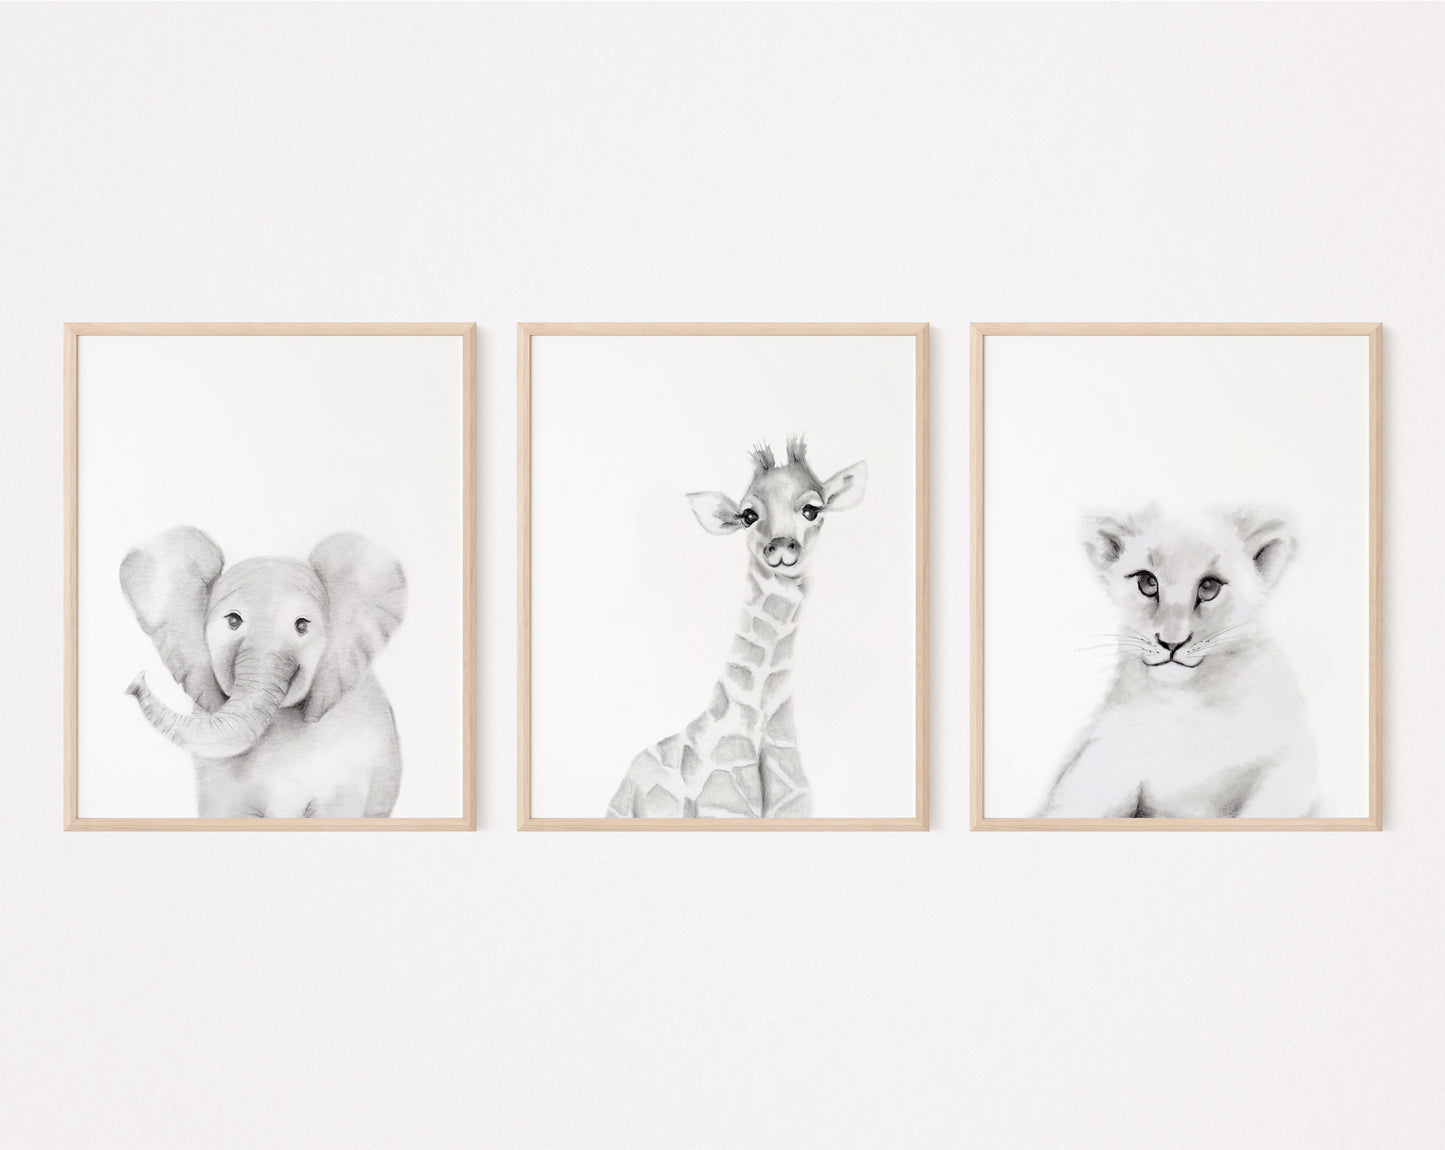 Safari Animal Faces Nursery Art Prints - Set of 3 - Studio Q - Art by Nicky Quartermaine Scott